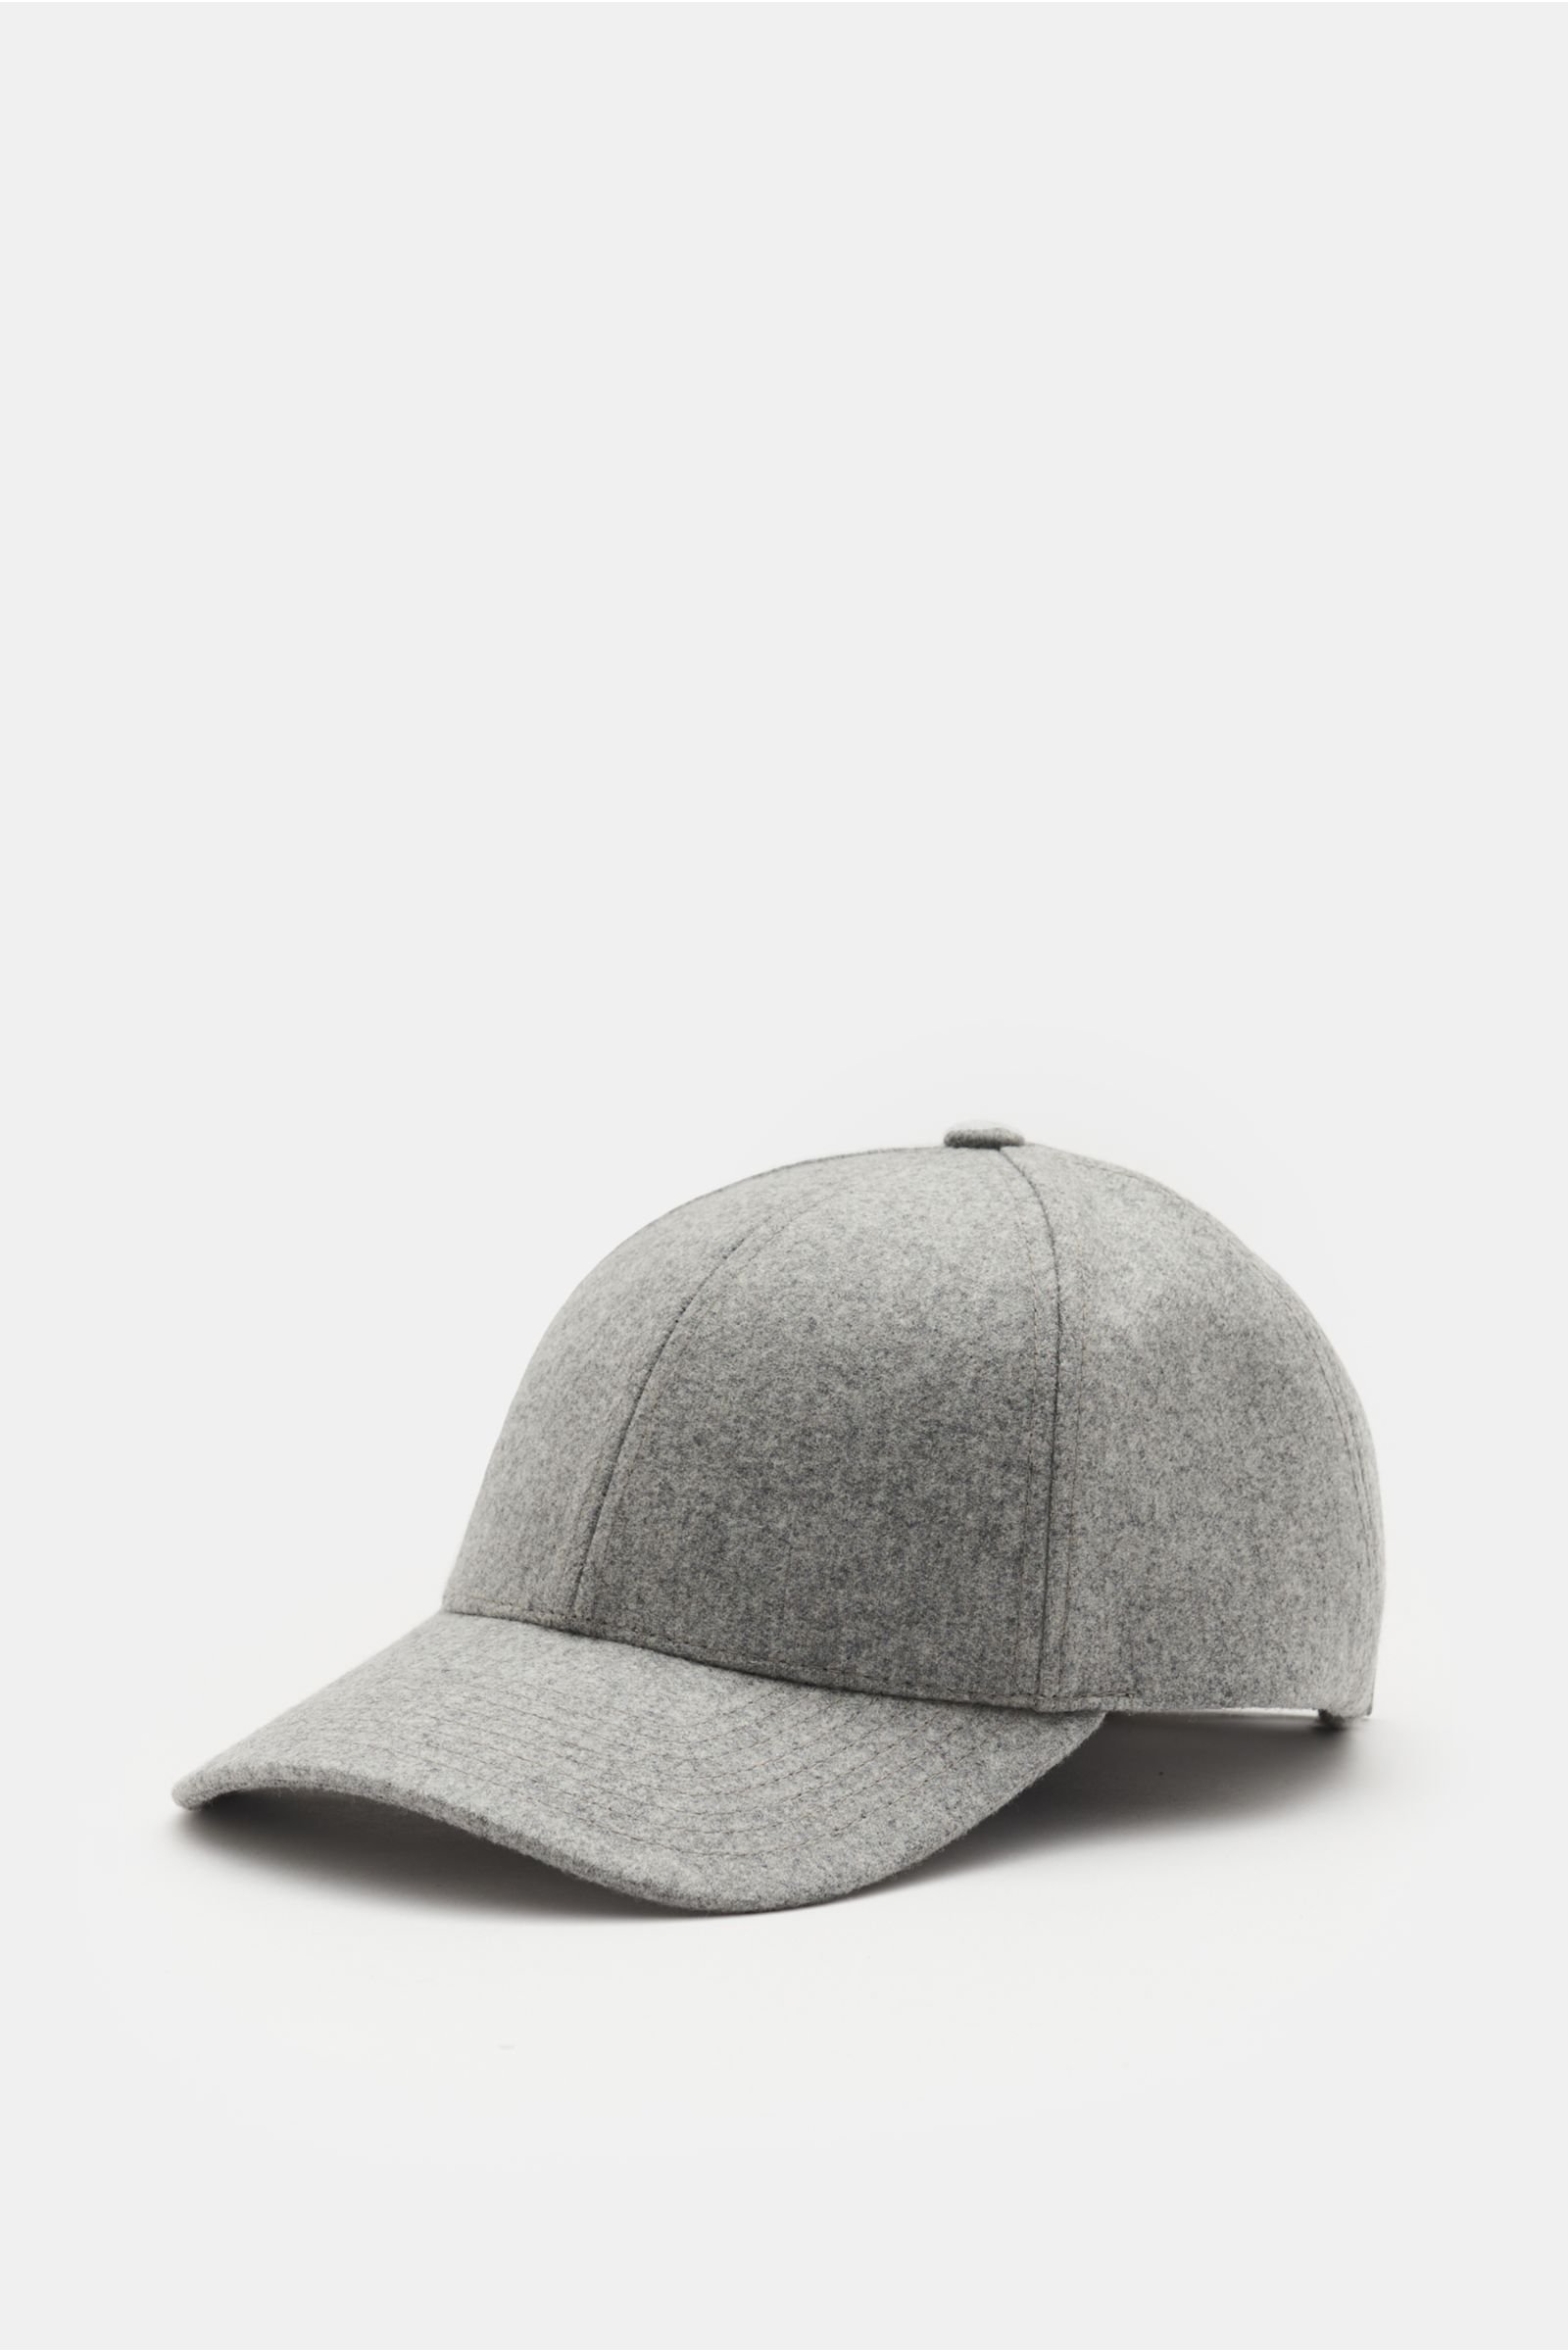 VARSITY HEADWEAR baseball cap light grey | BRAUN Hamburg